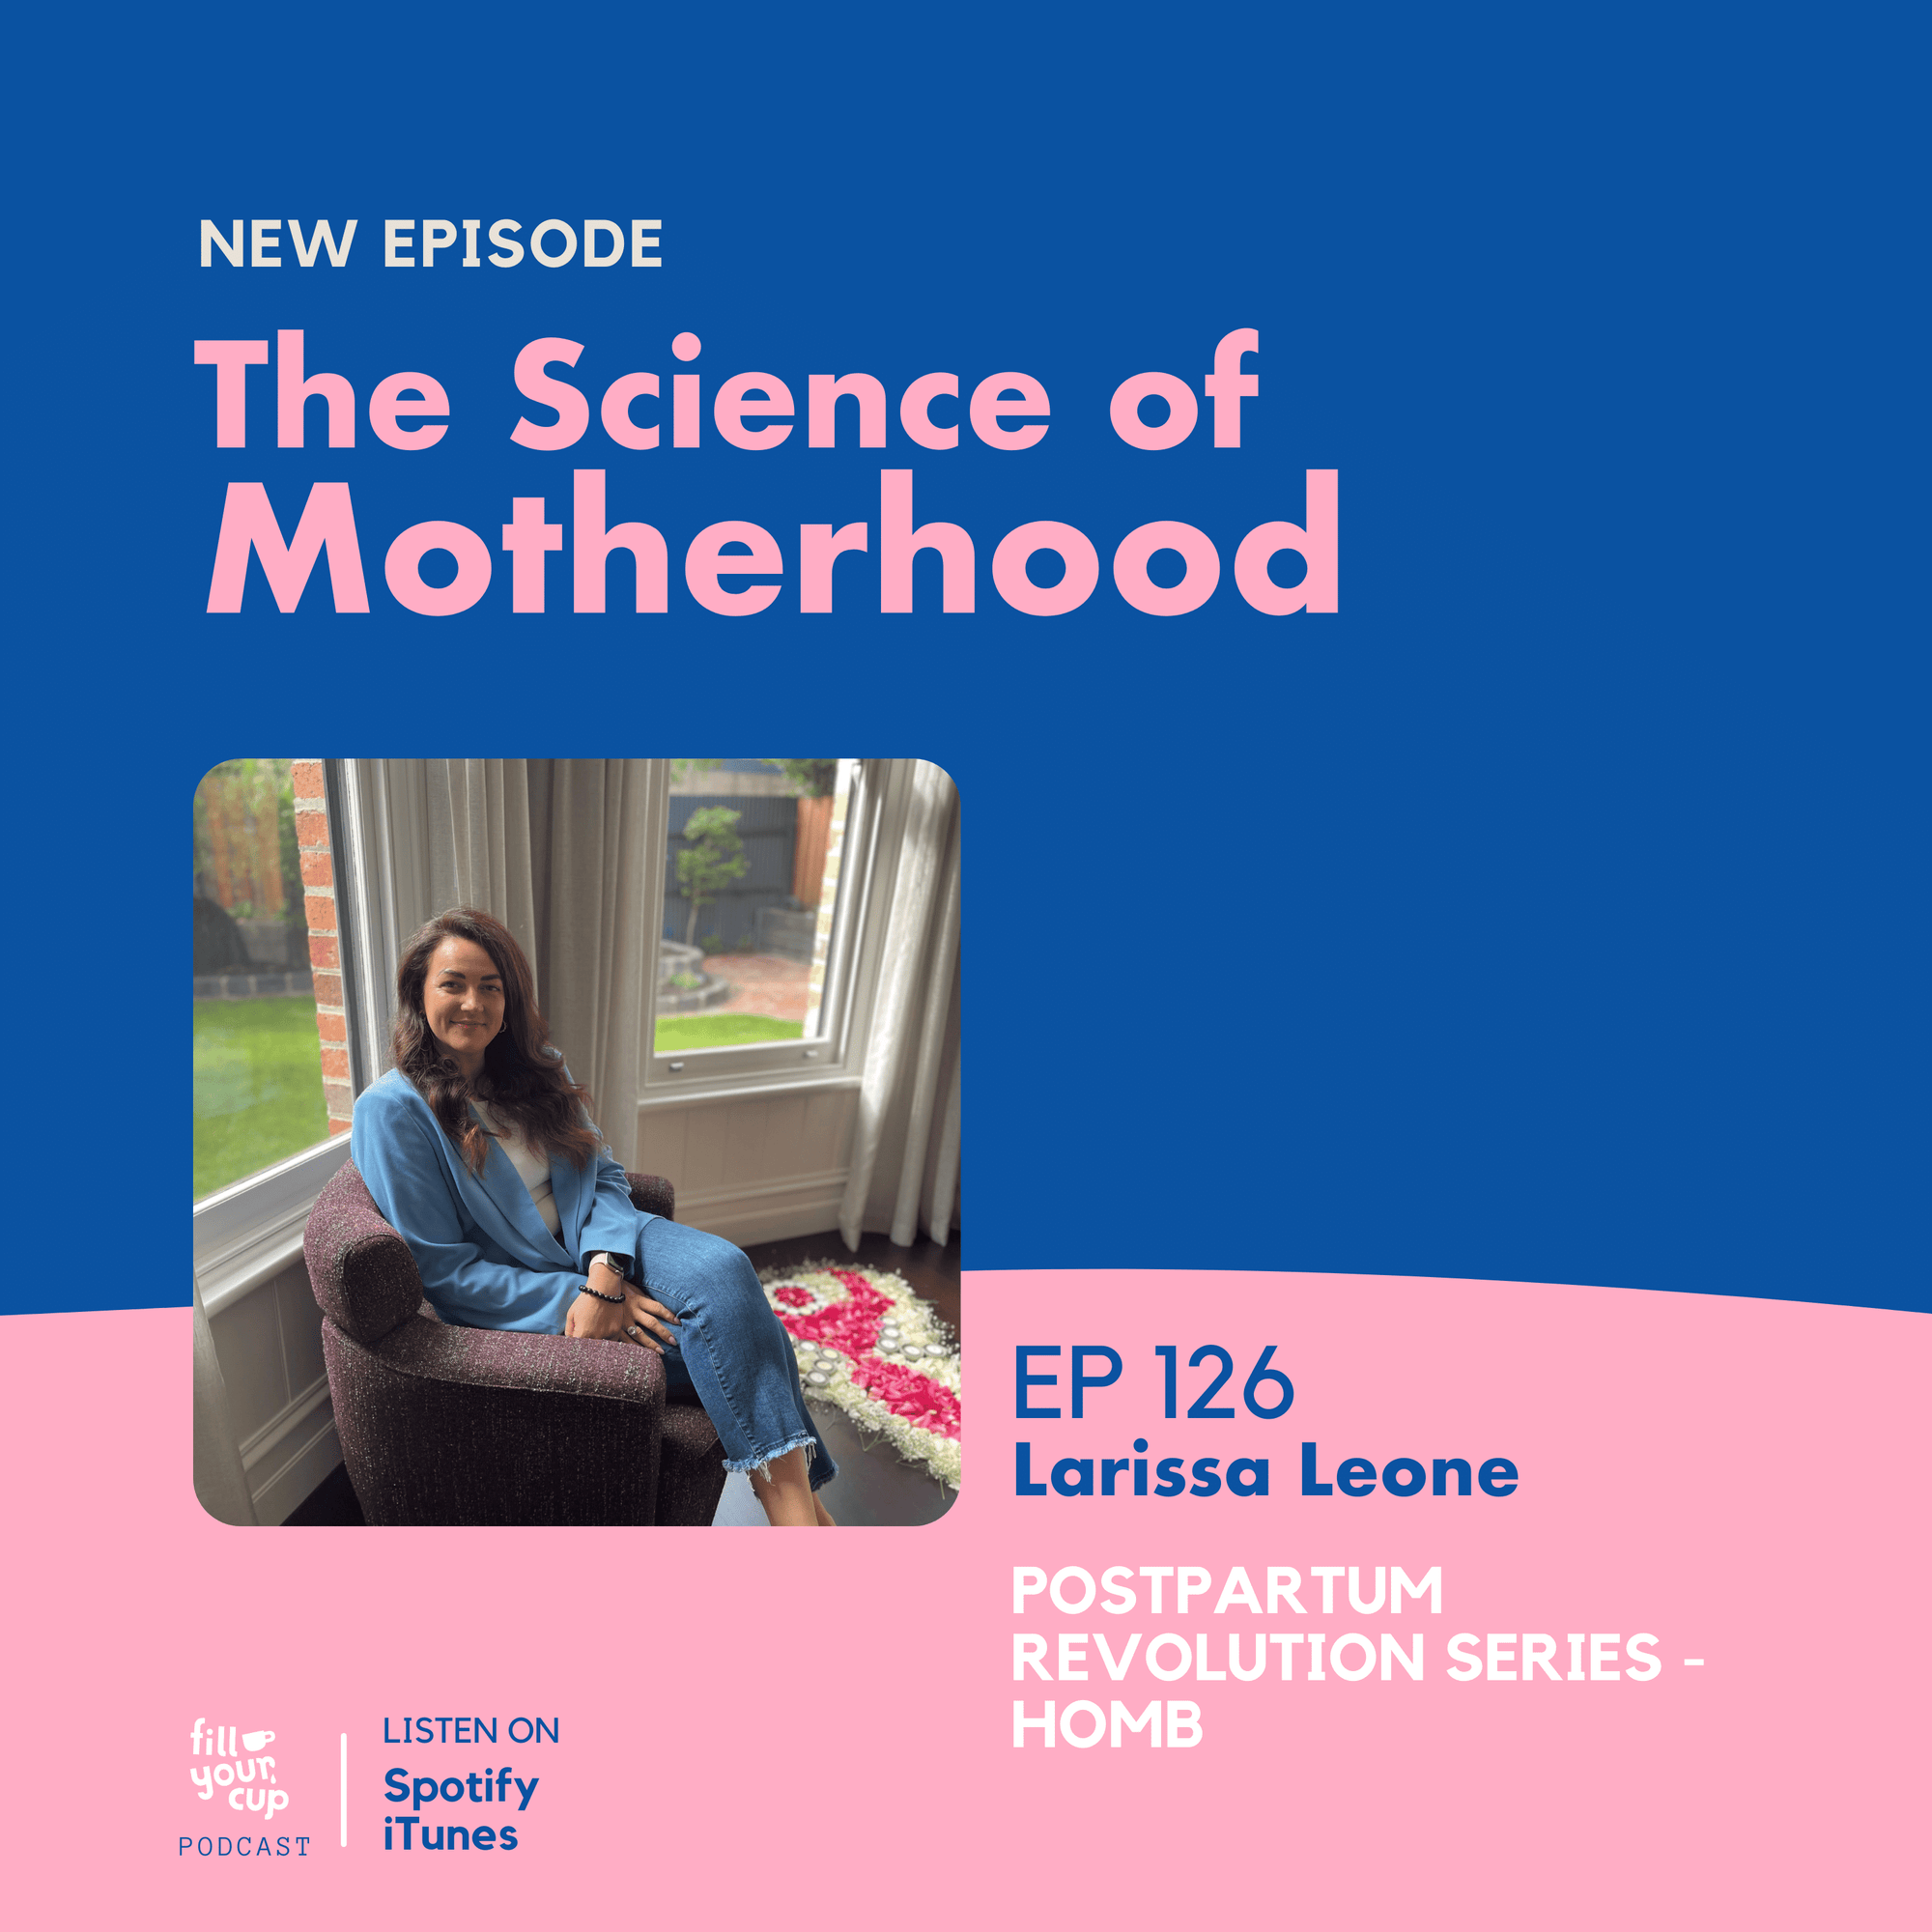 Ep 126. Larissa Leone of Homb - Postpartum Revolution Series